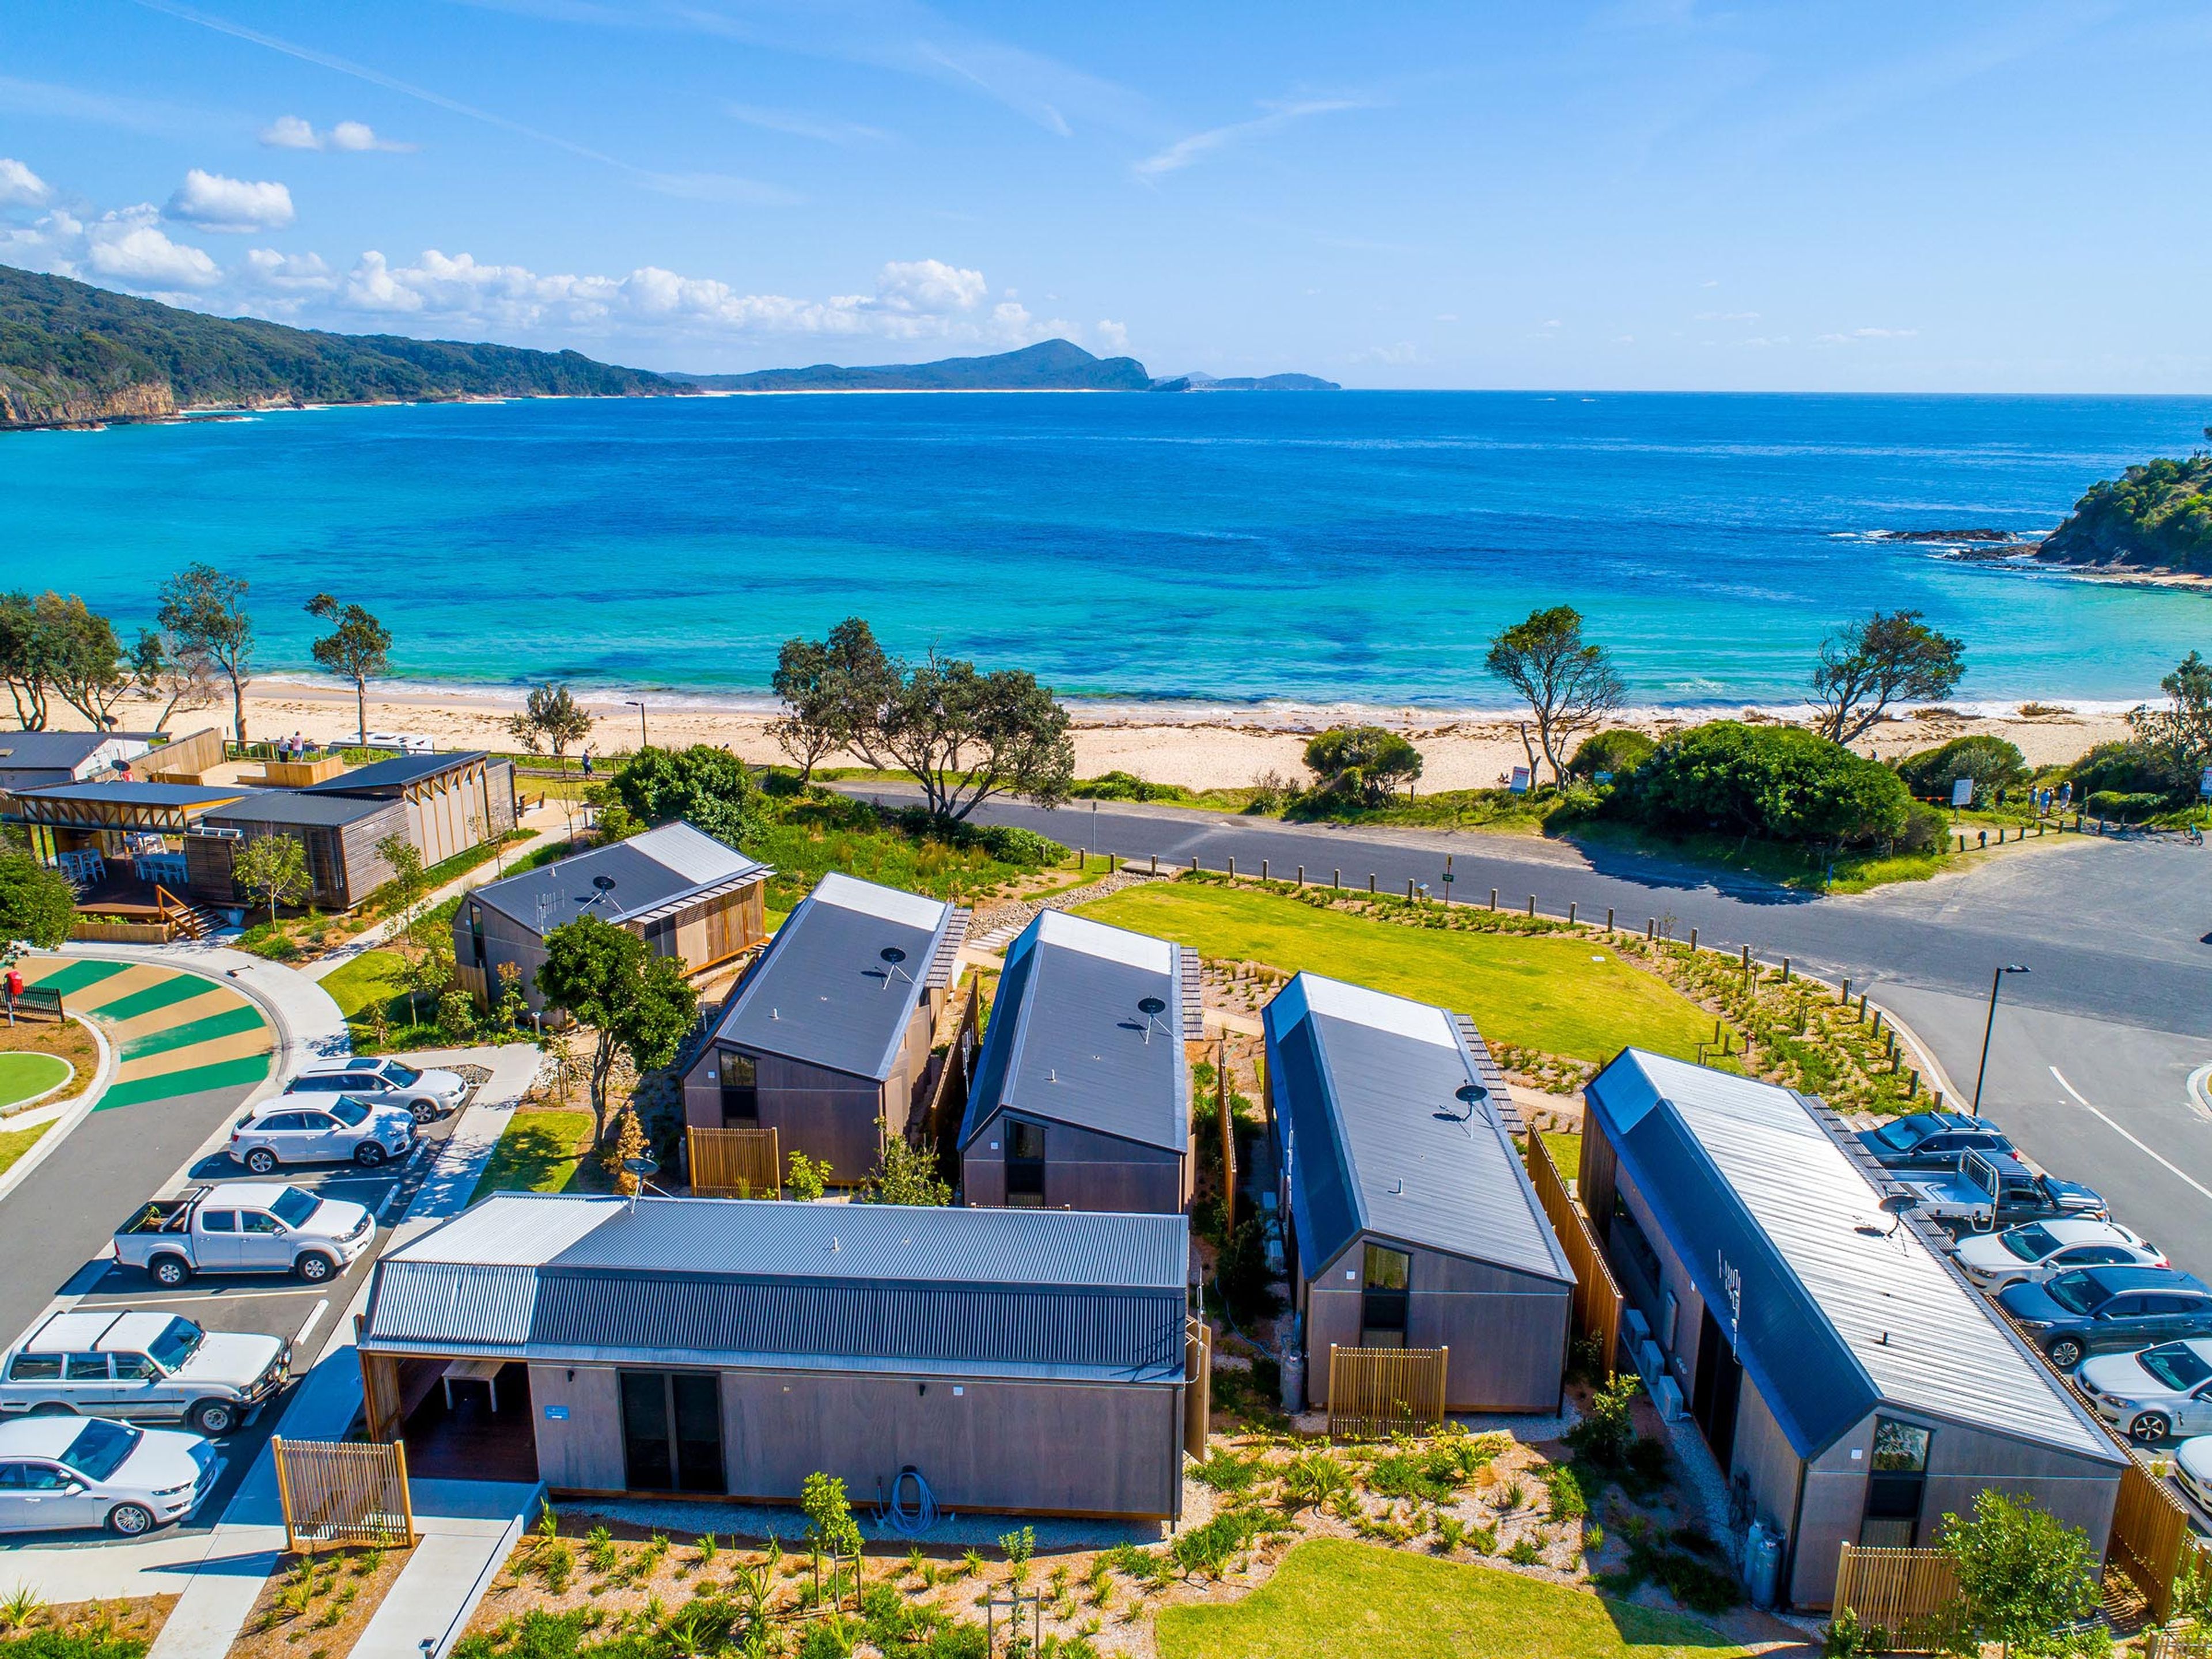 Reflections Seal Rocks holiday and caravan park Premium Villa cabin accommodation with ocean views